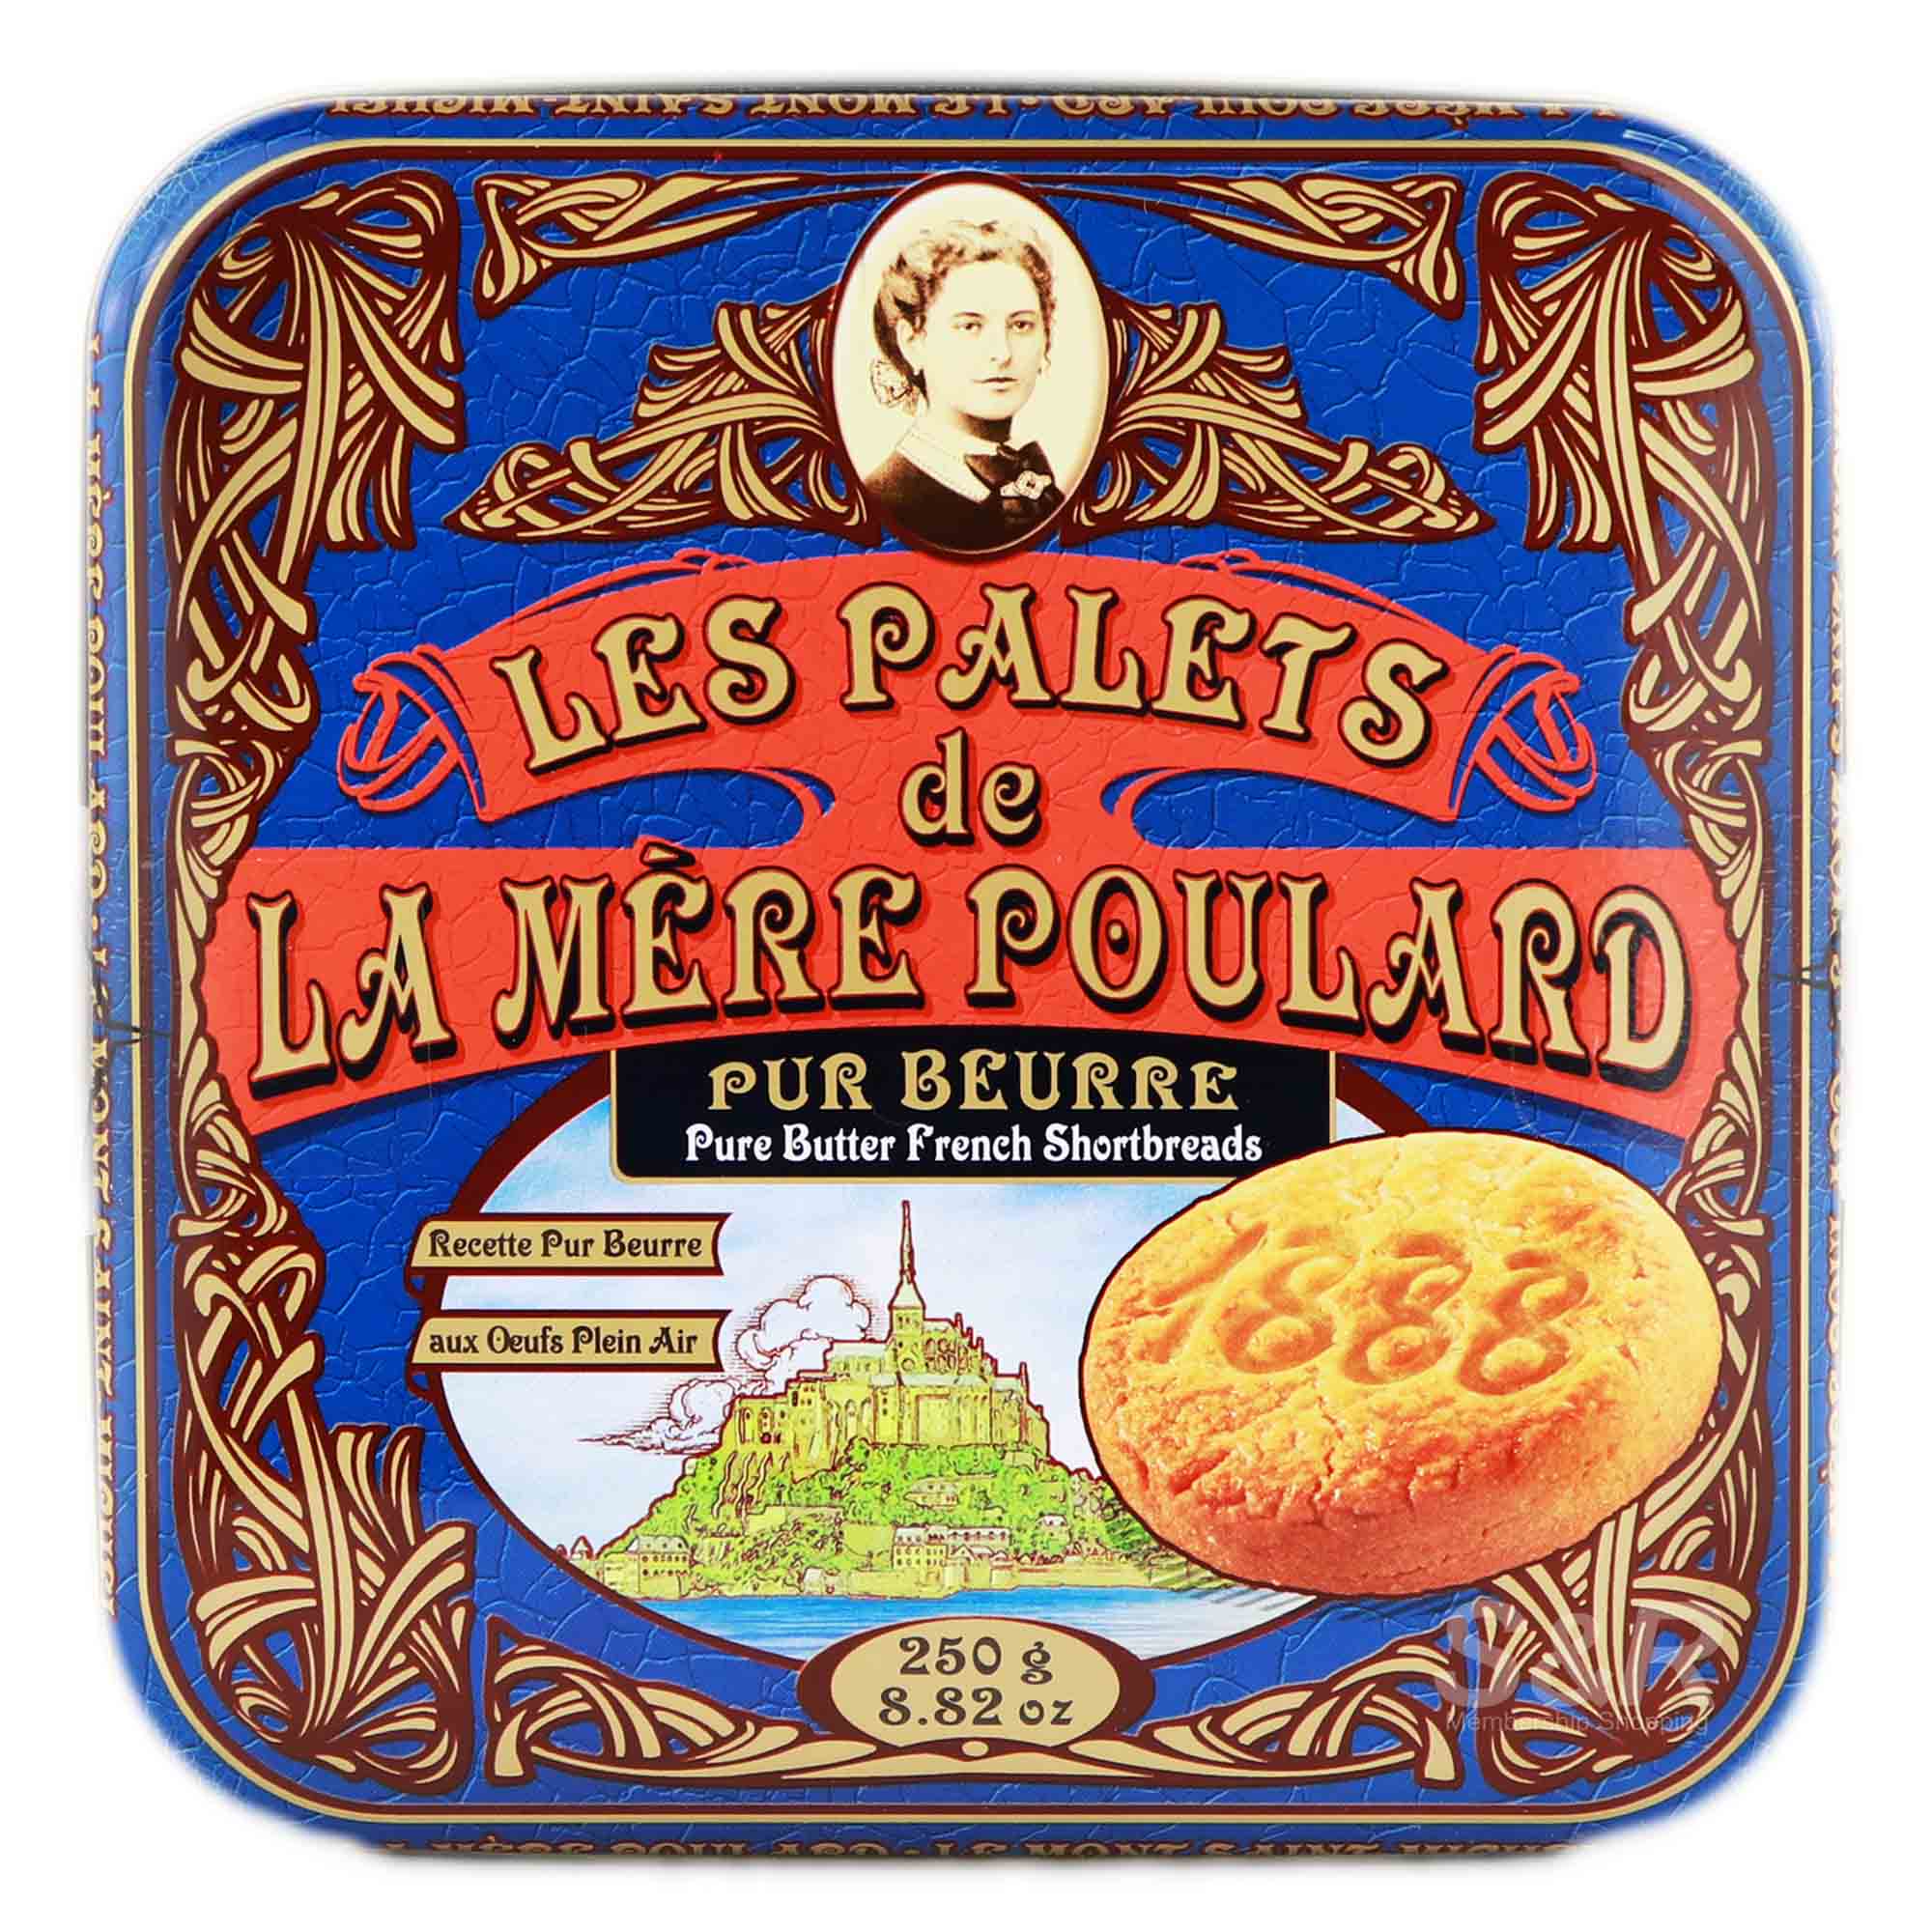 La Mere Poulard Pure Butter French Shortbreads 250g